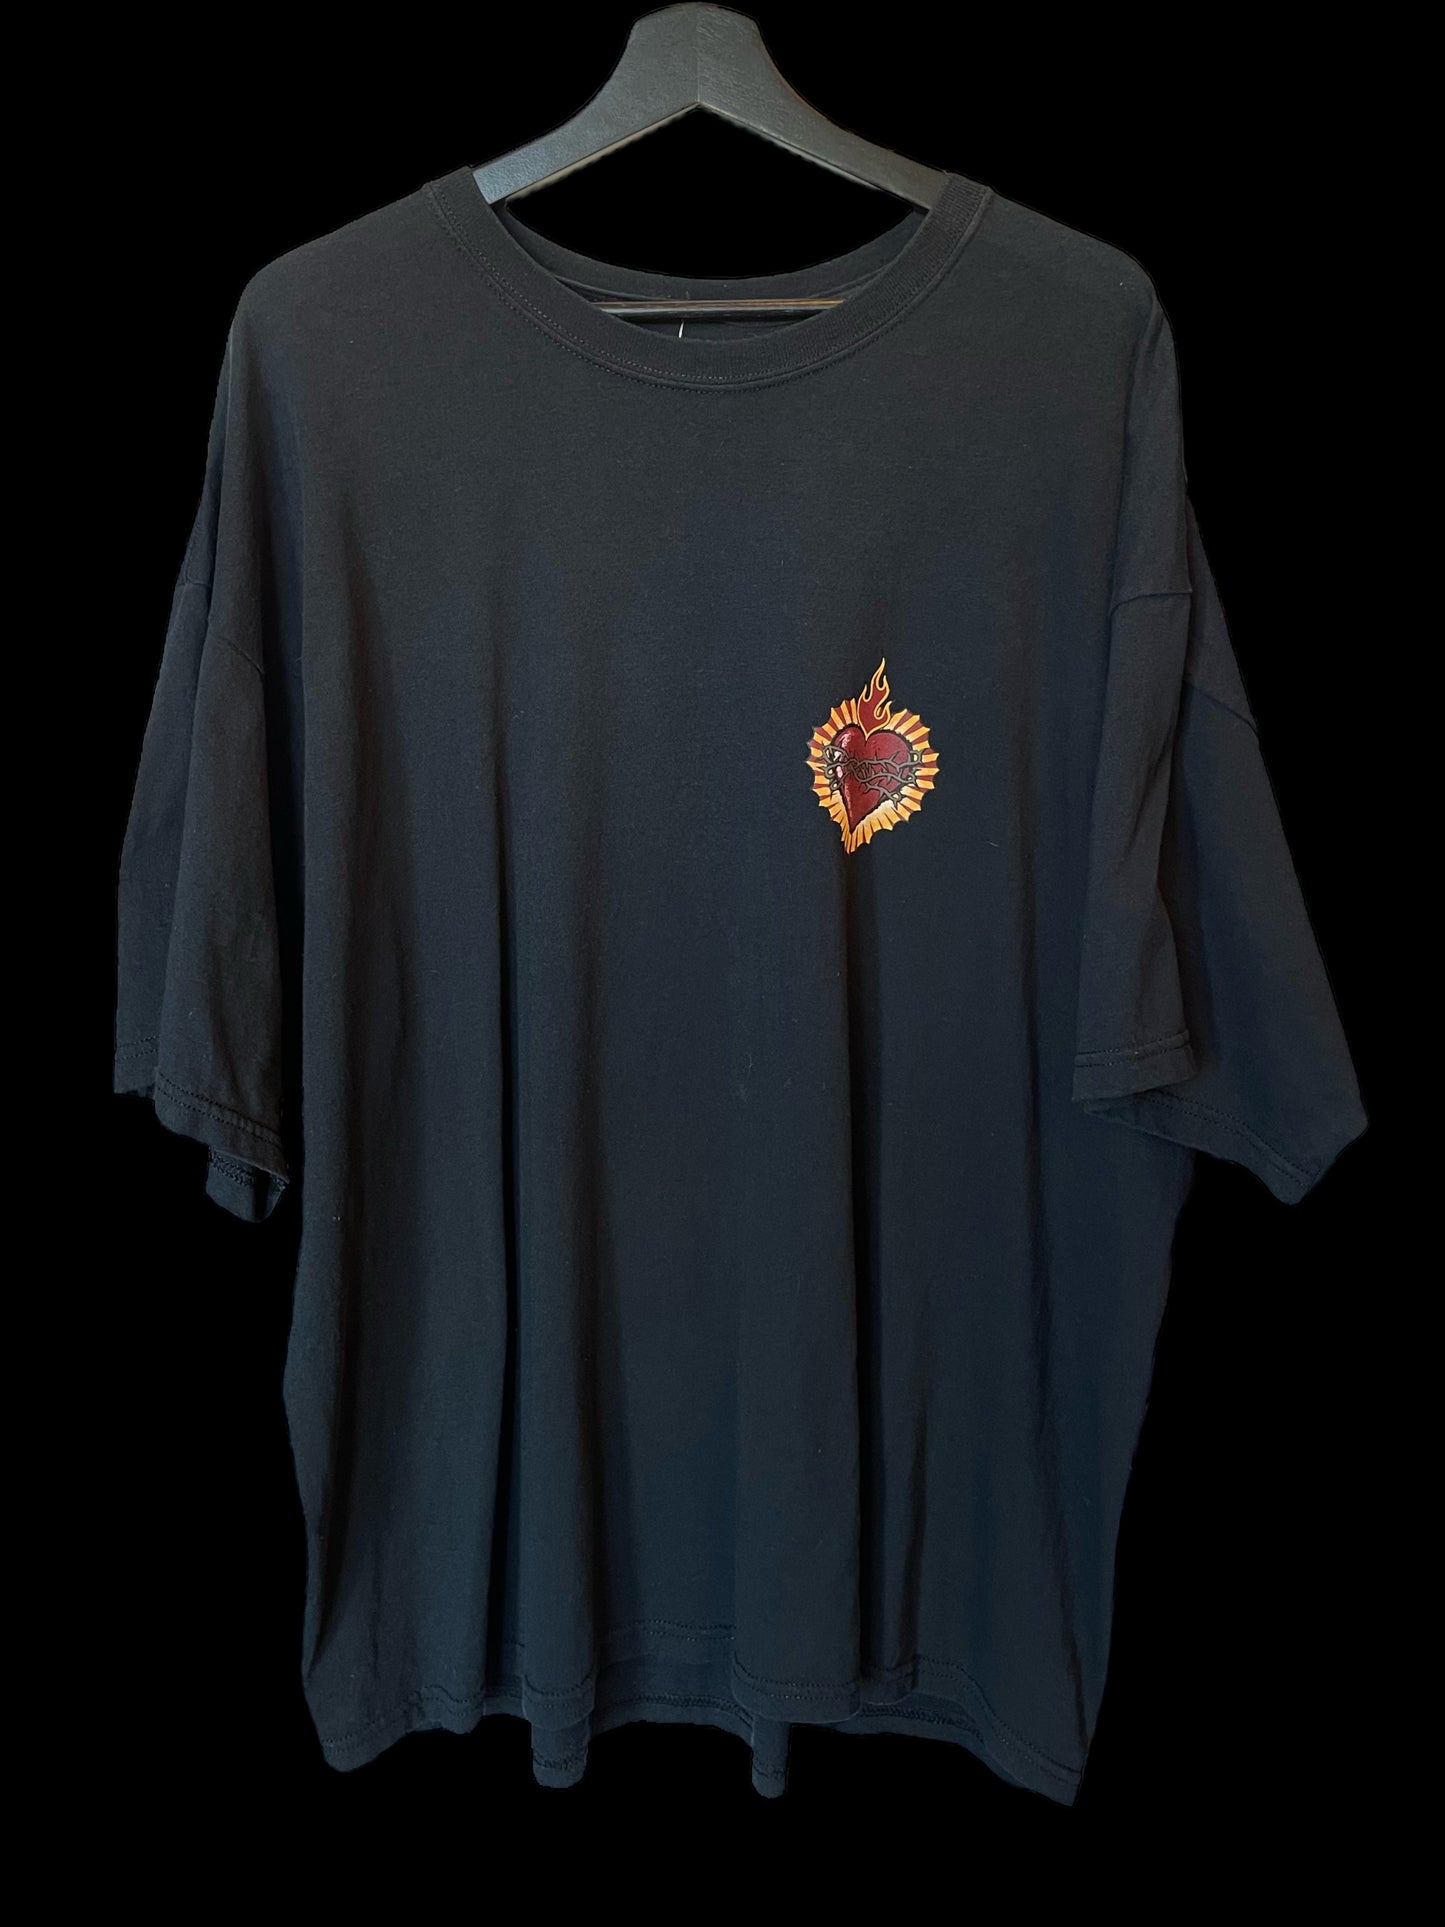 Jesus is Life Vintage Shirt XXL - Premium  from Feu de Dieu - Just $39.99! Shop now at Feu de Dieu